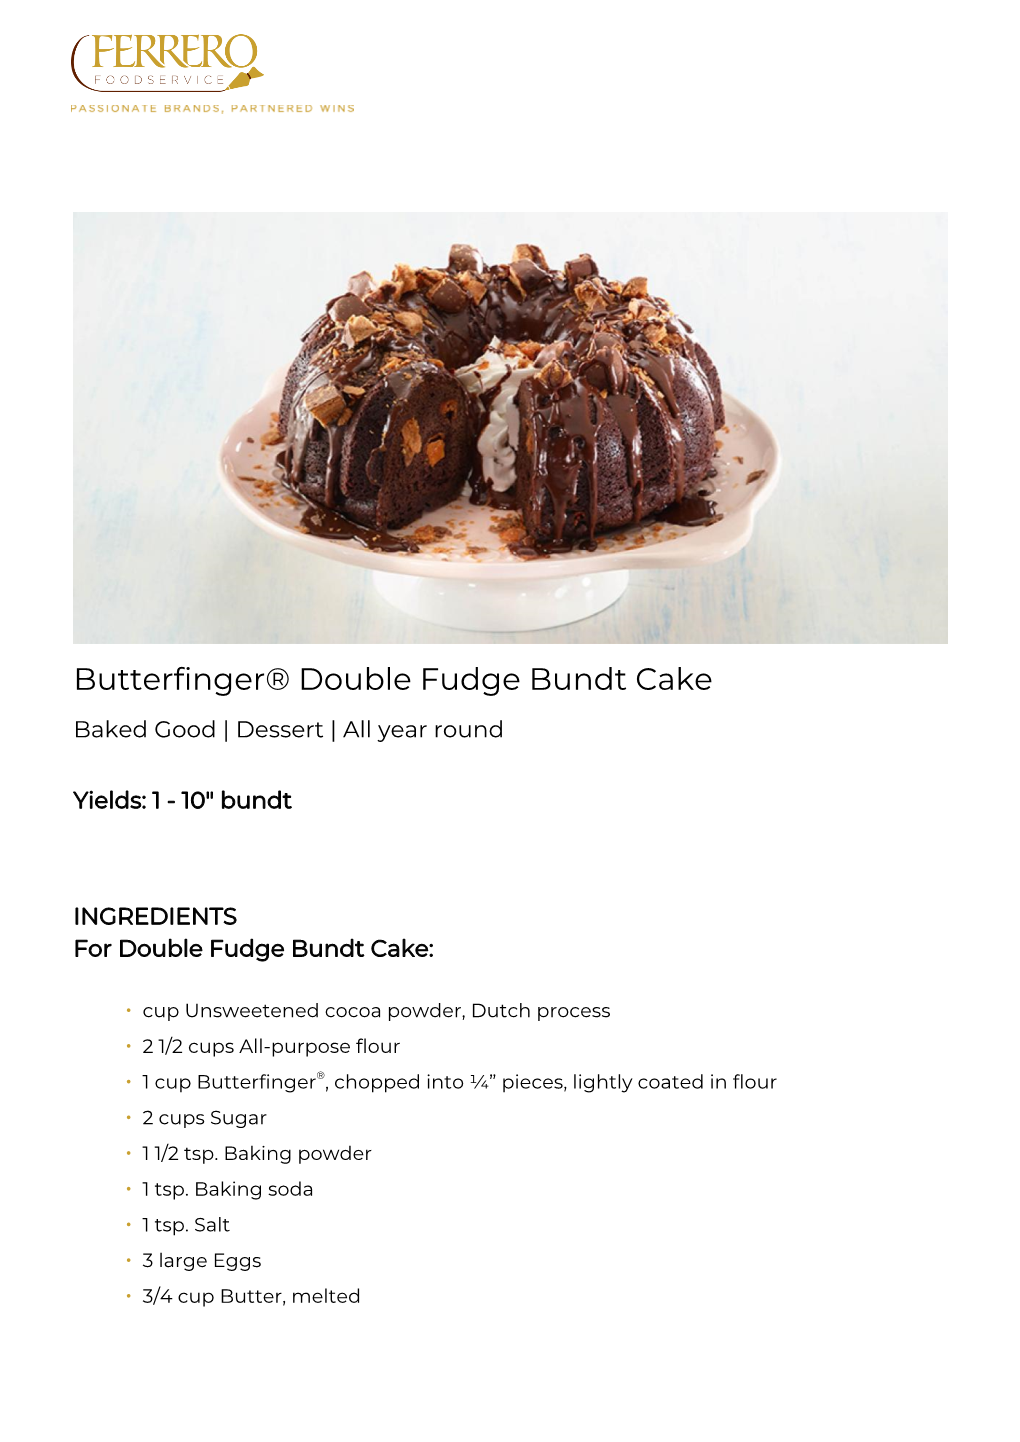 Butterfinger® Double Fudge Bundt Cake Baked Good | Dessert | All Year Round